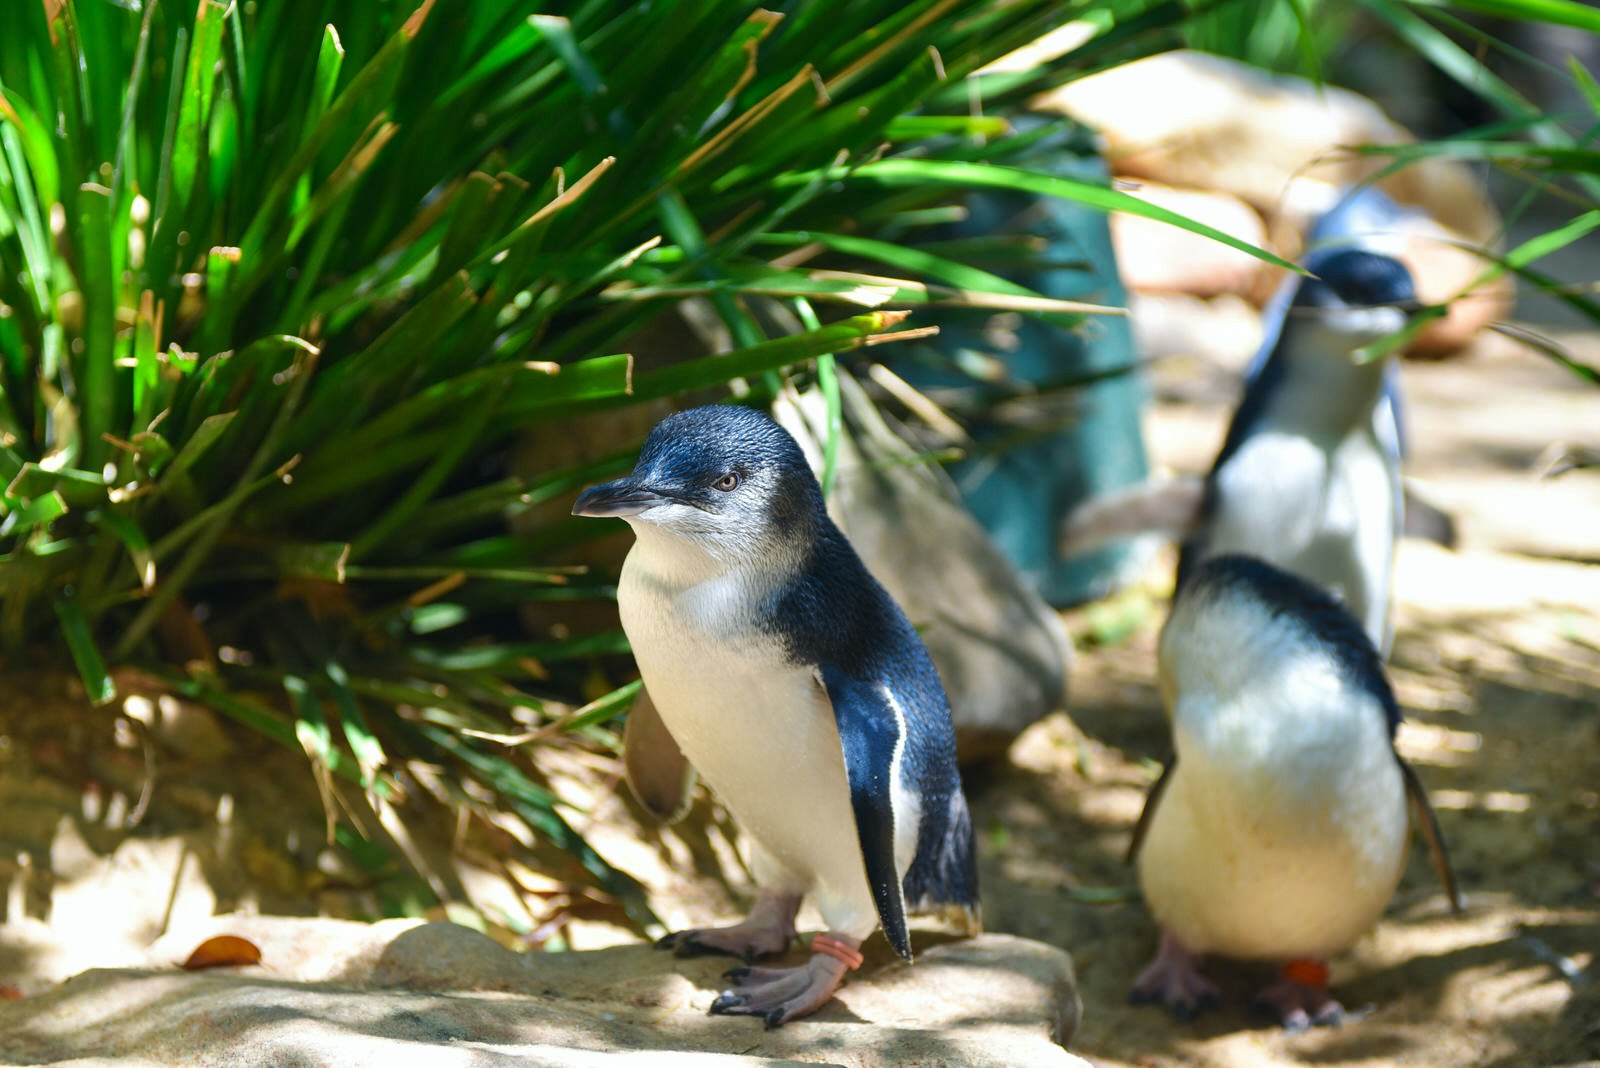 Little blue penguins walking in a herd in Featherdale Wildlife park zoo in Australia